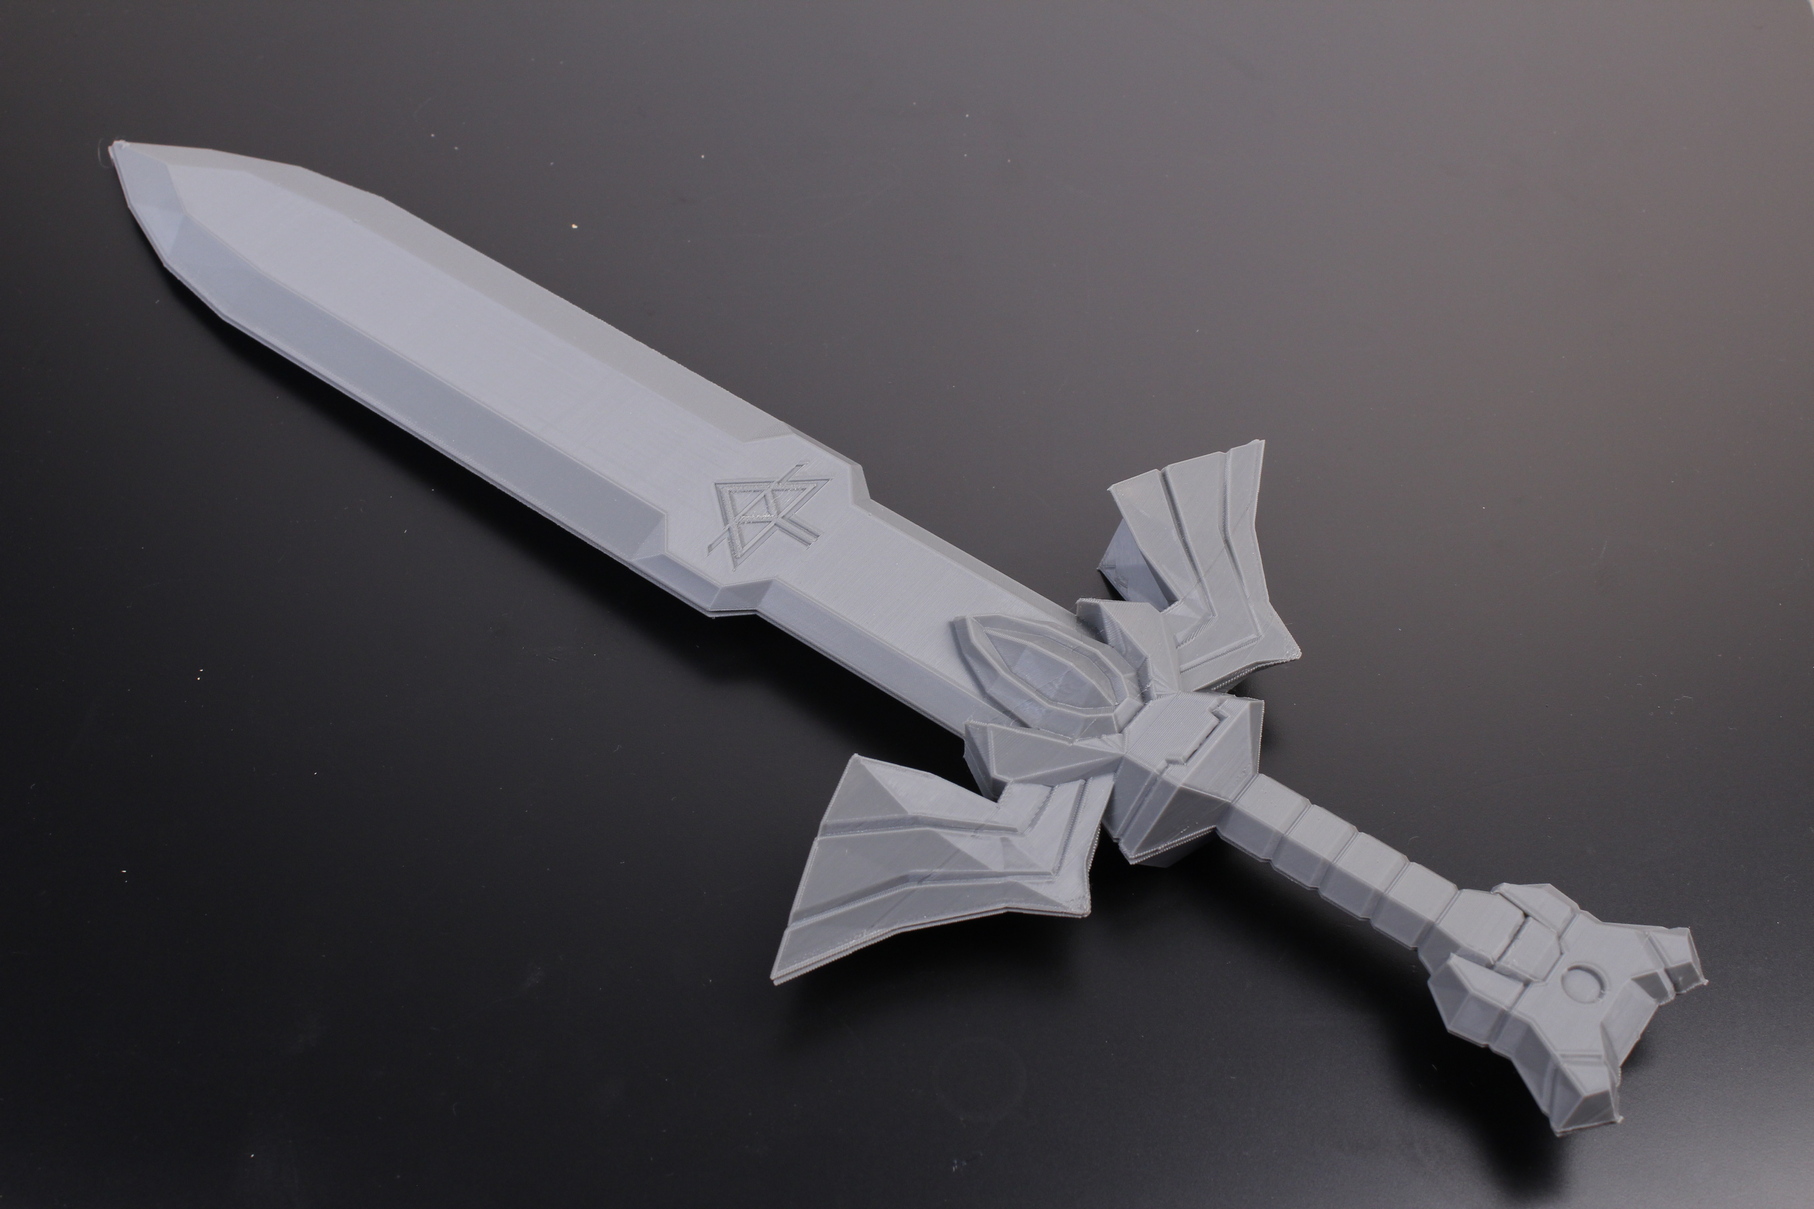 Master Sword printed on Creality CR 30 3DPrintMill 7 | Creality 3DPrintMill (CR-30) Review: Belt Printer for Batch 3D Printing